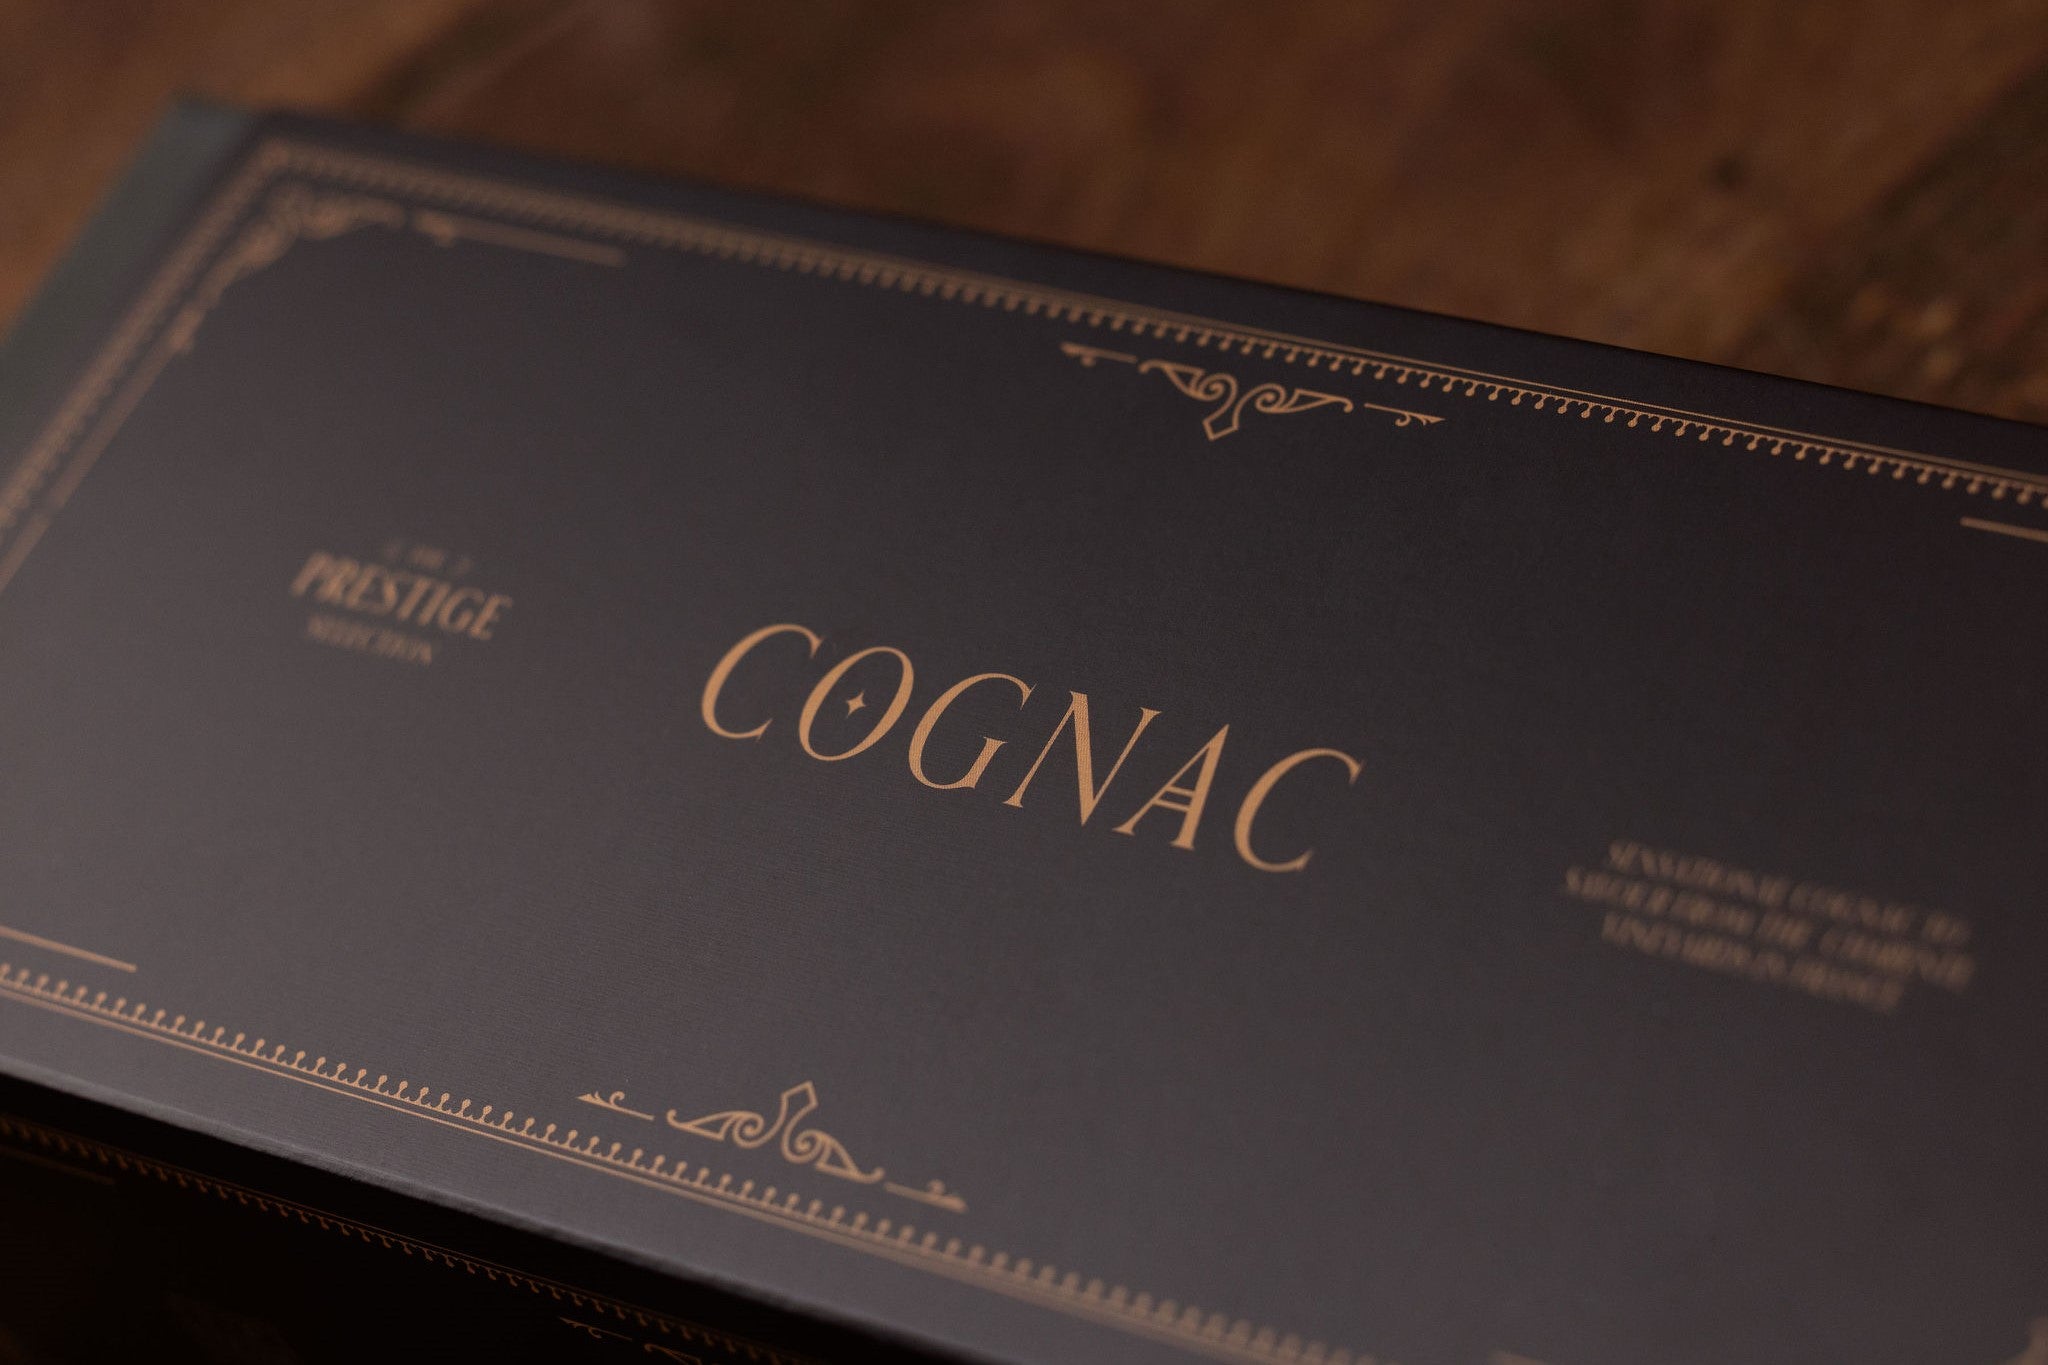 The Selection Spirit Buy Tasting Set Prestige Online Co - The Cognac | The